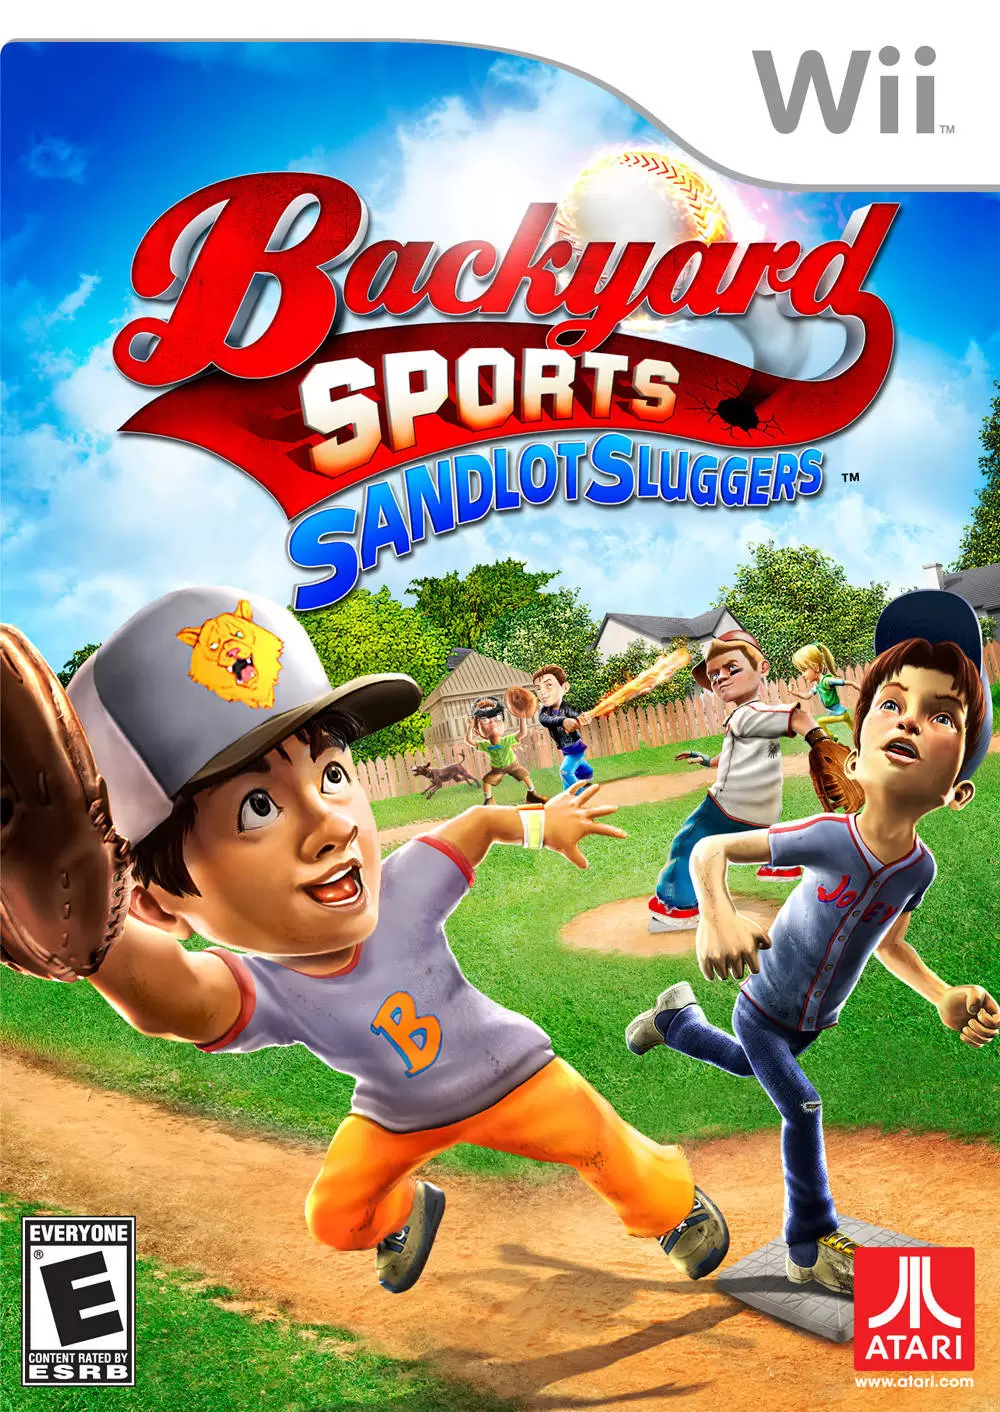 Jeux Nintendo Wii - Backyard Sports: Sandlot Sluggers